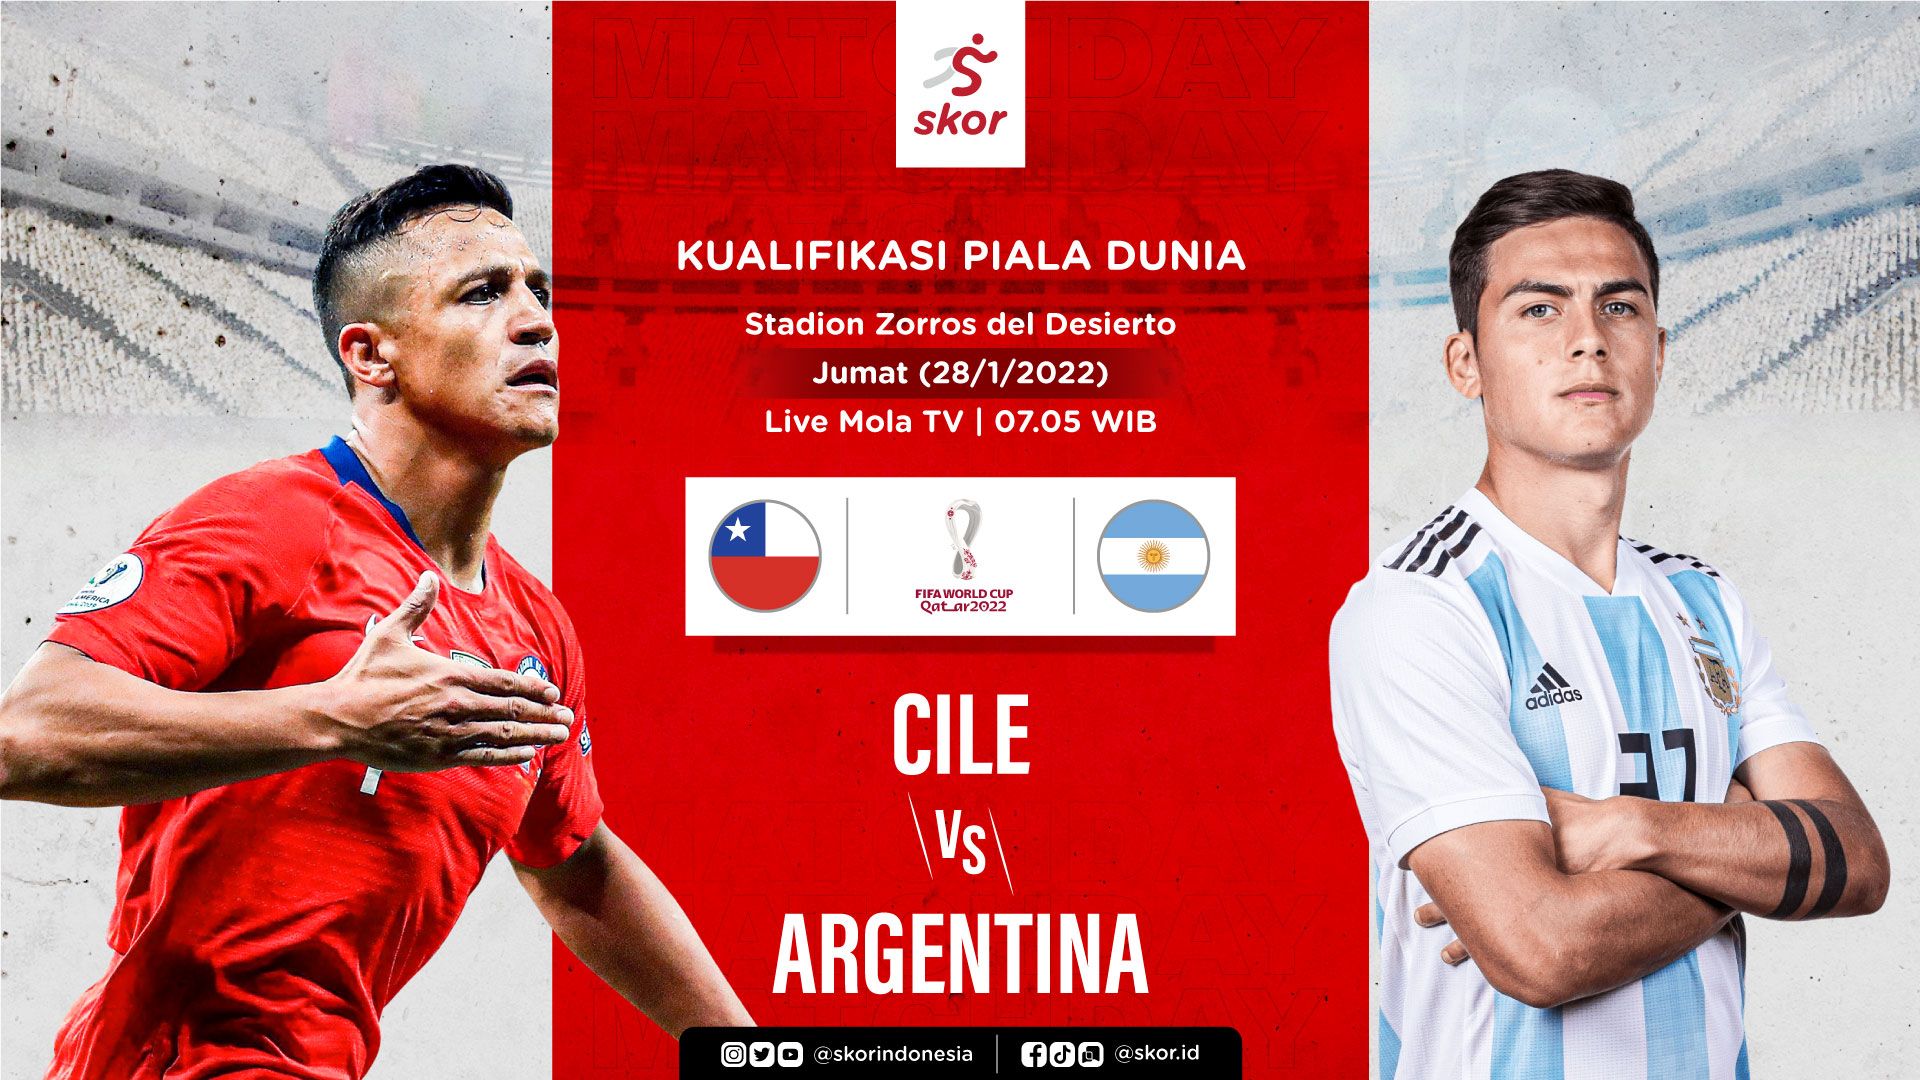 Cover Cile vs Argentina